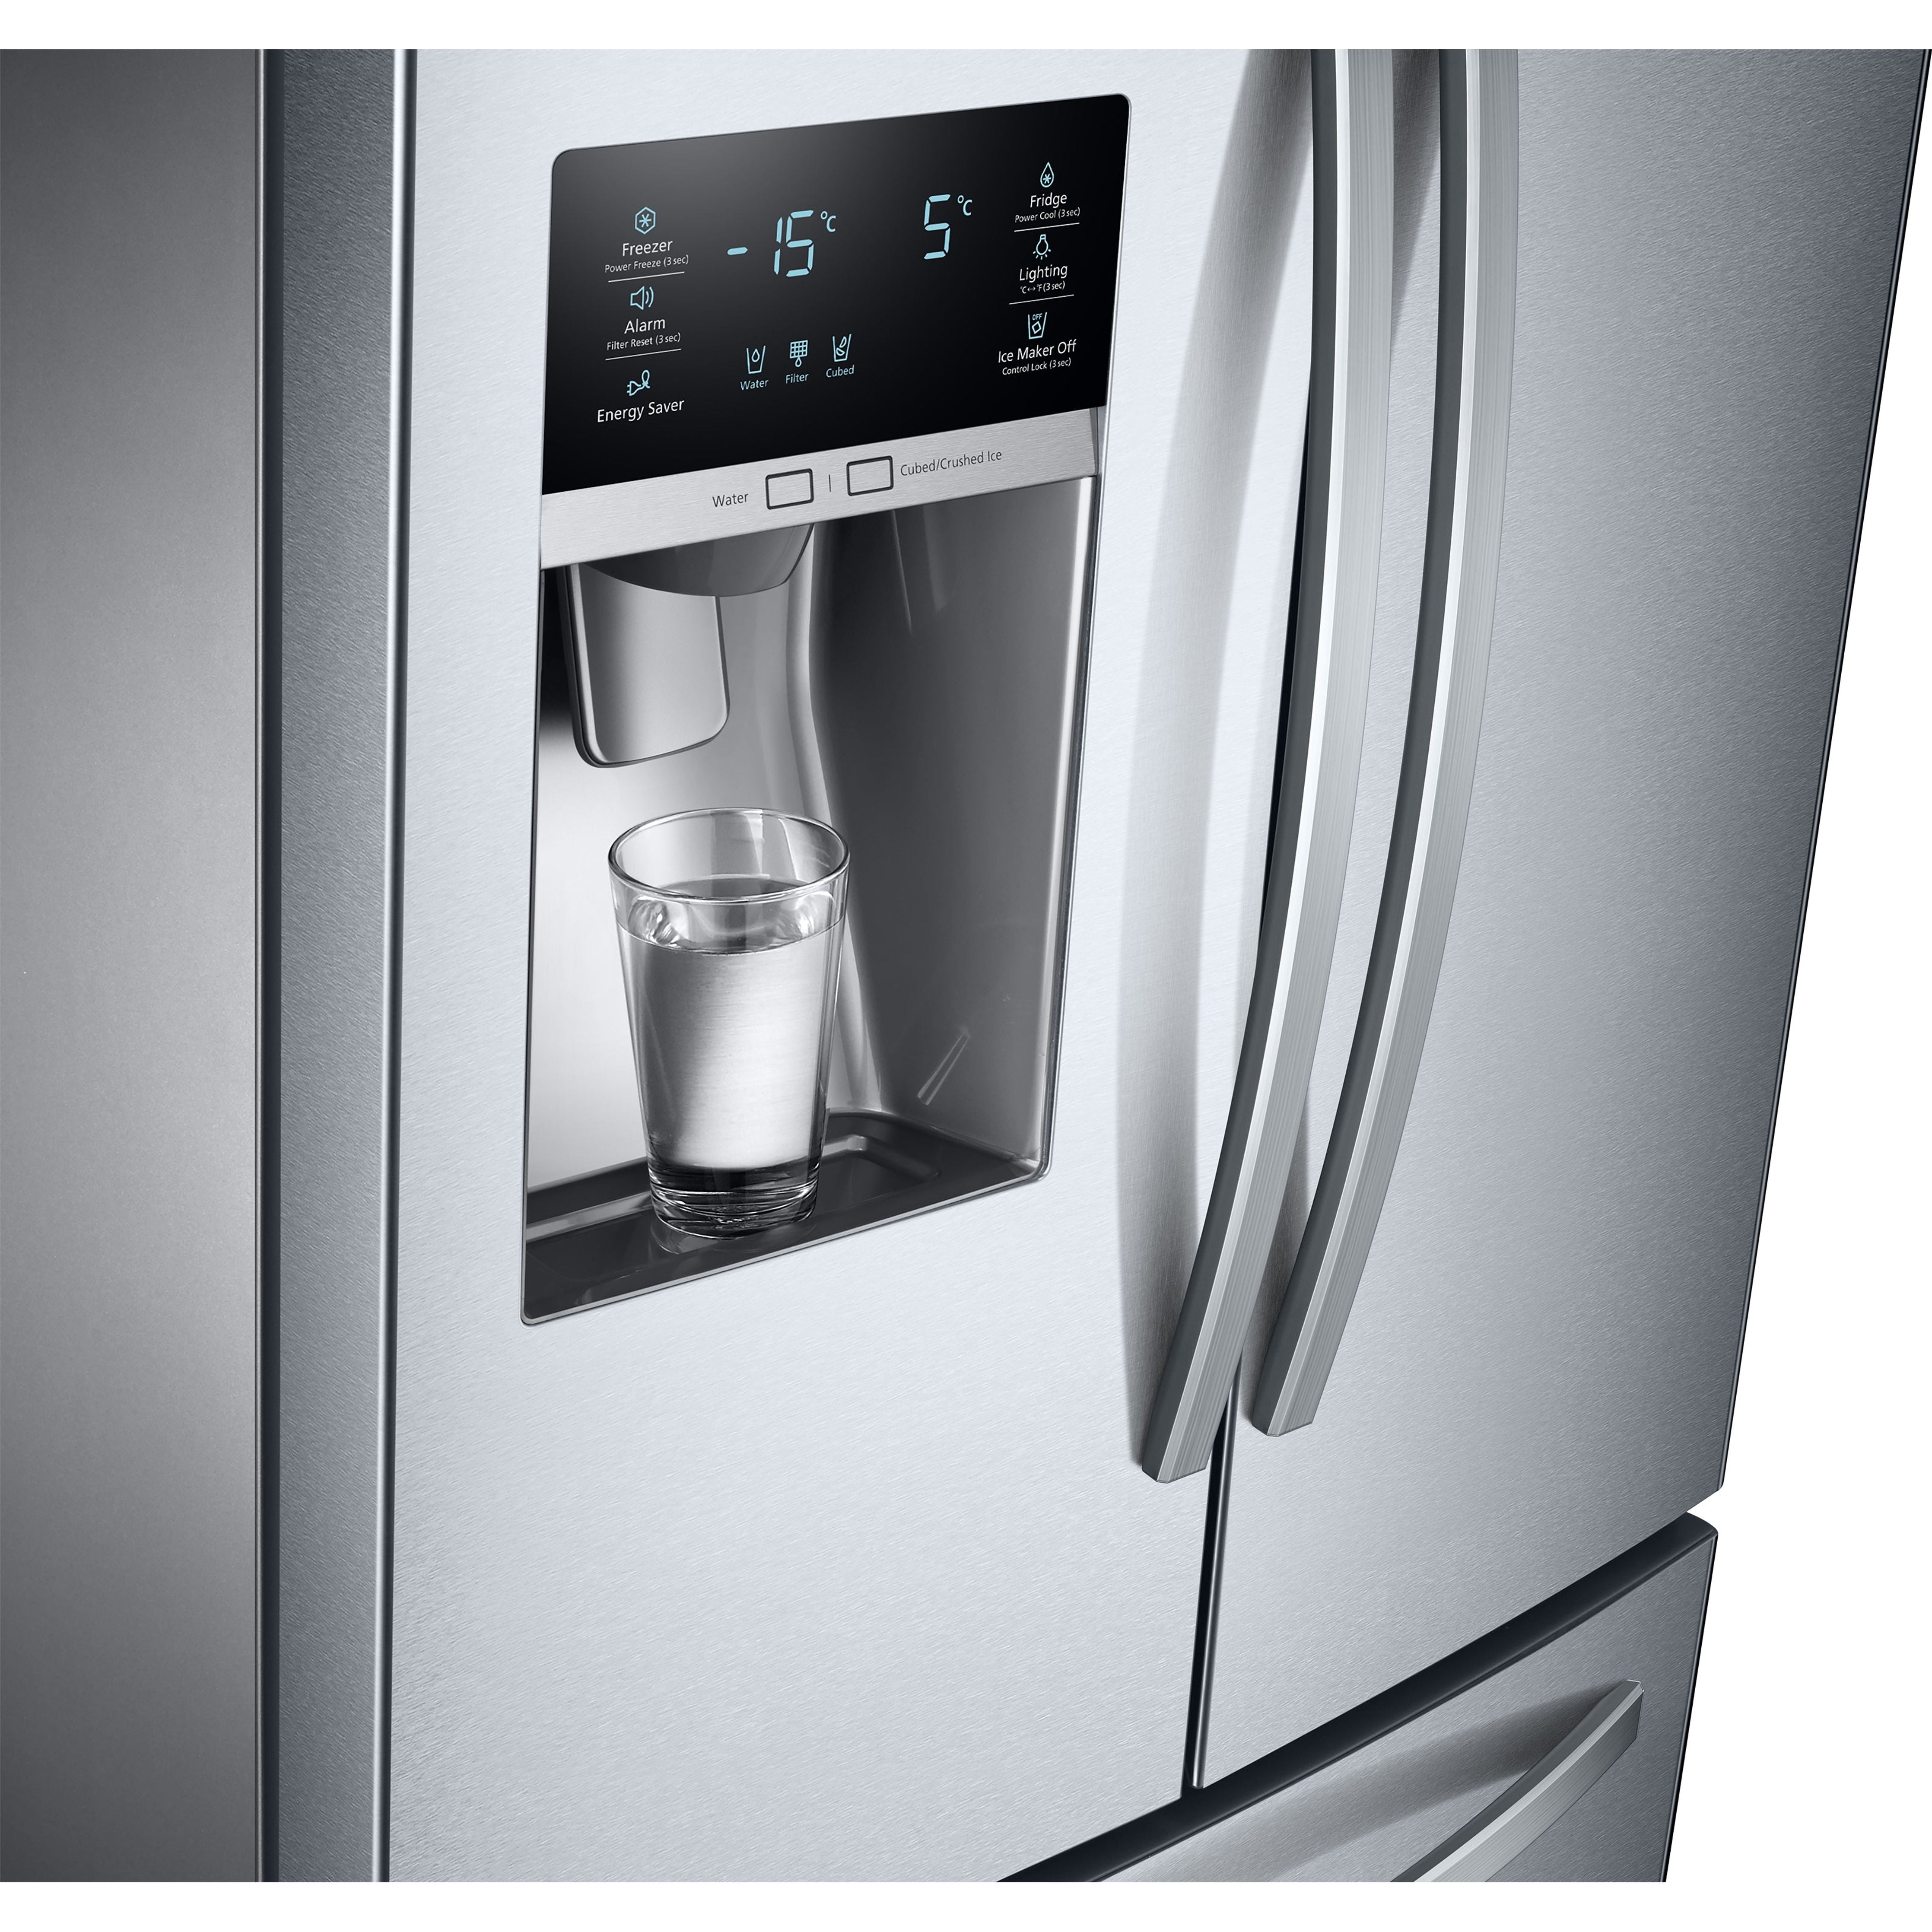 Samsung RF26J7510SR French Door Refrigerator